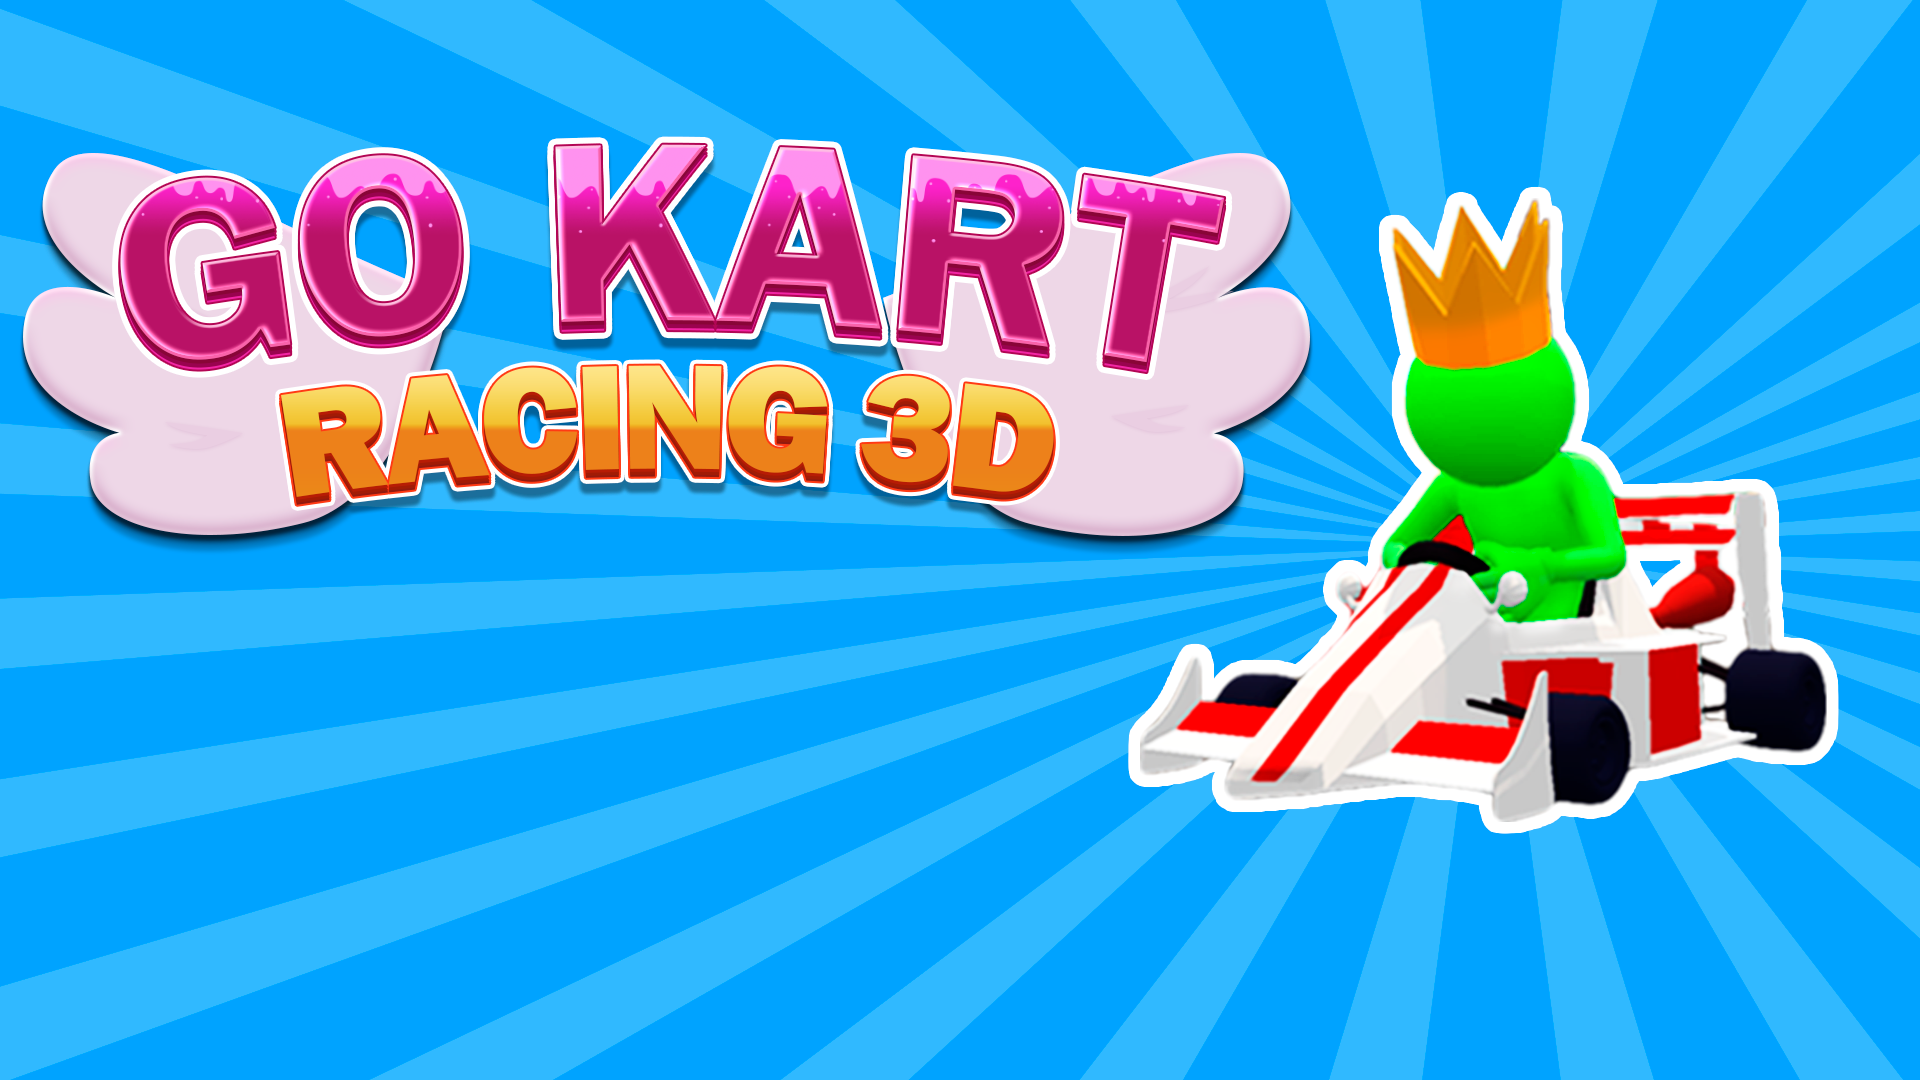 Go Kart Racing 3D Game Image